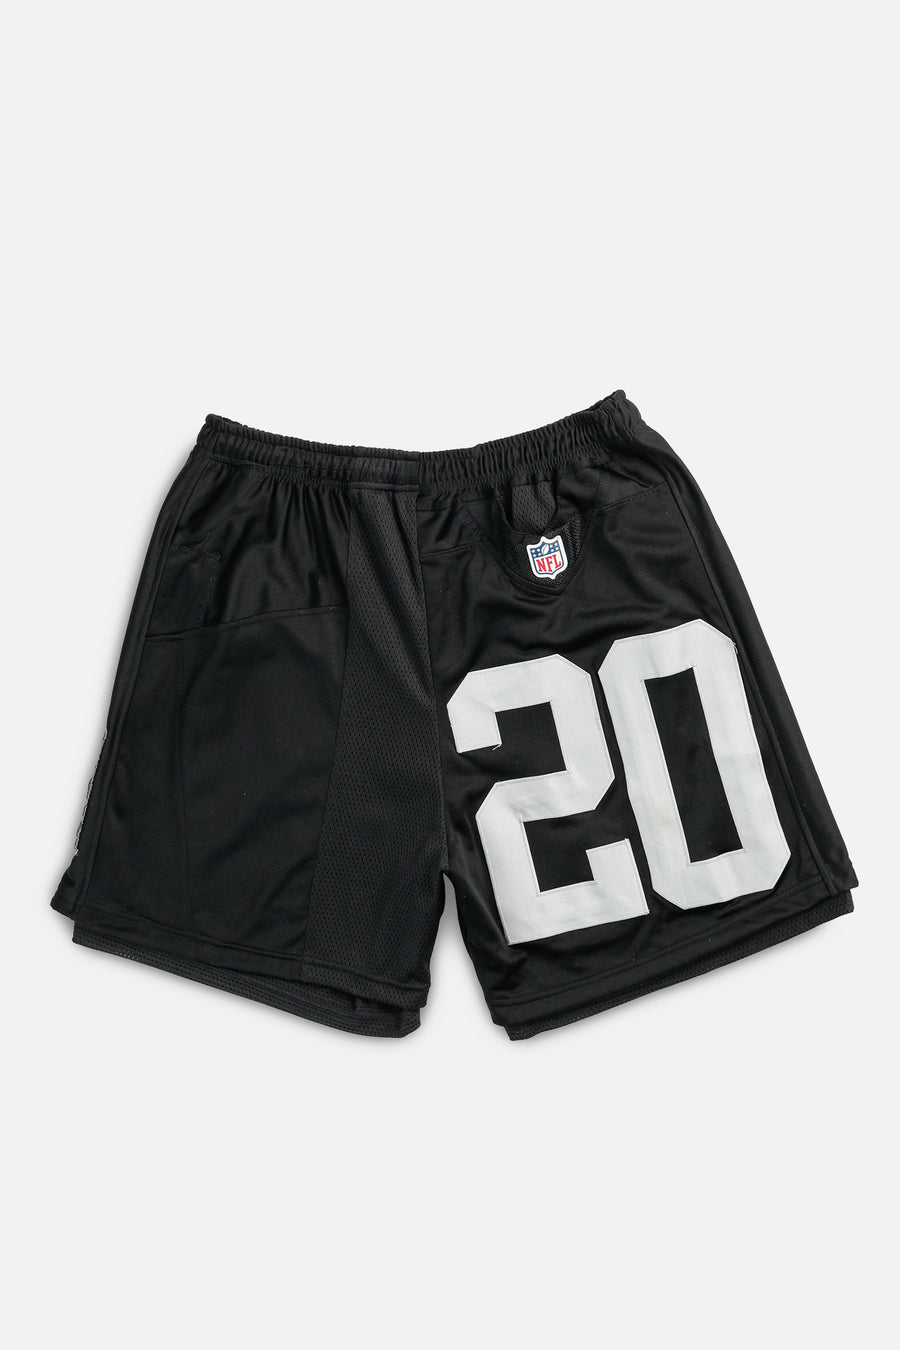 Unisex Rework Pittsburgh Steelers NFL Jersey Shorts - XL